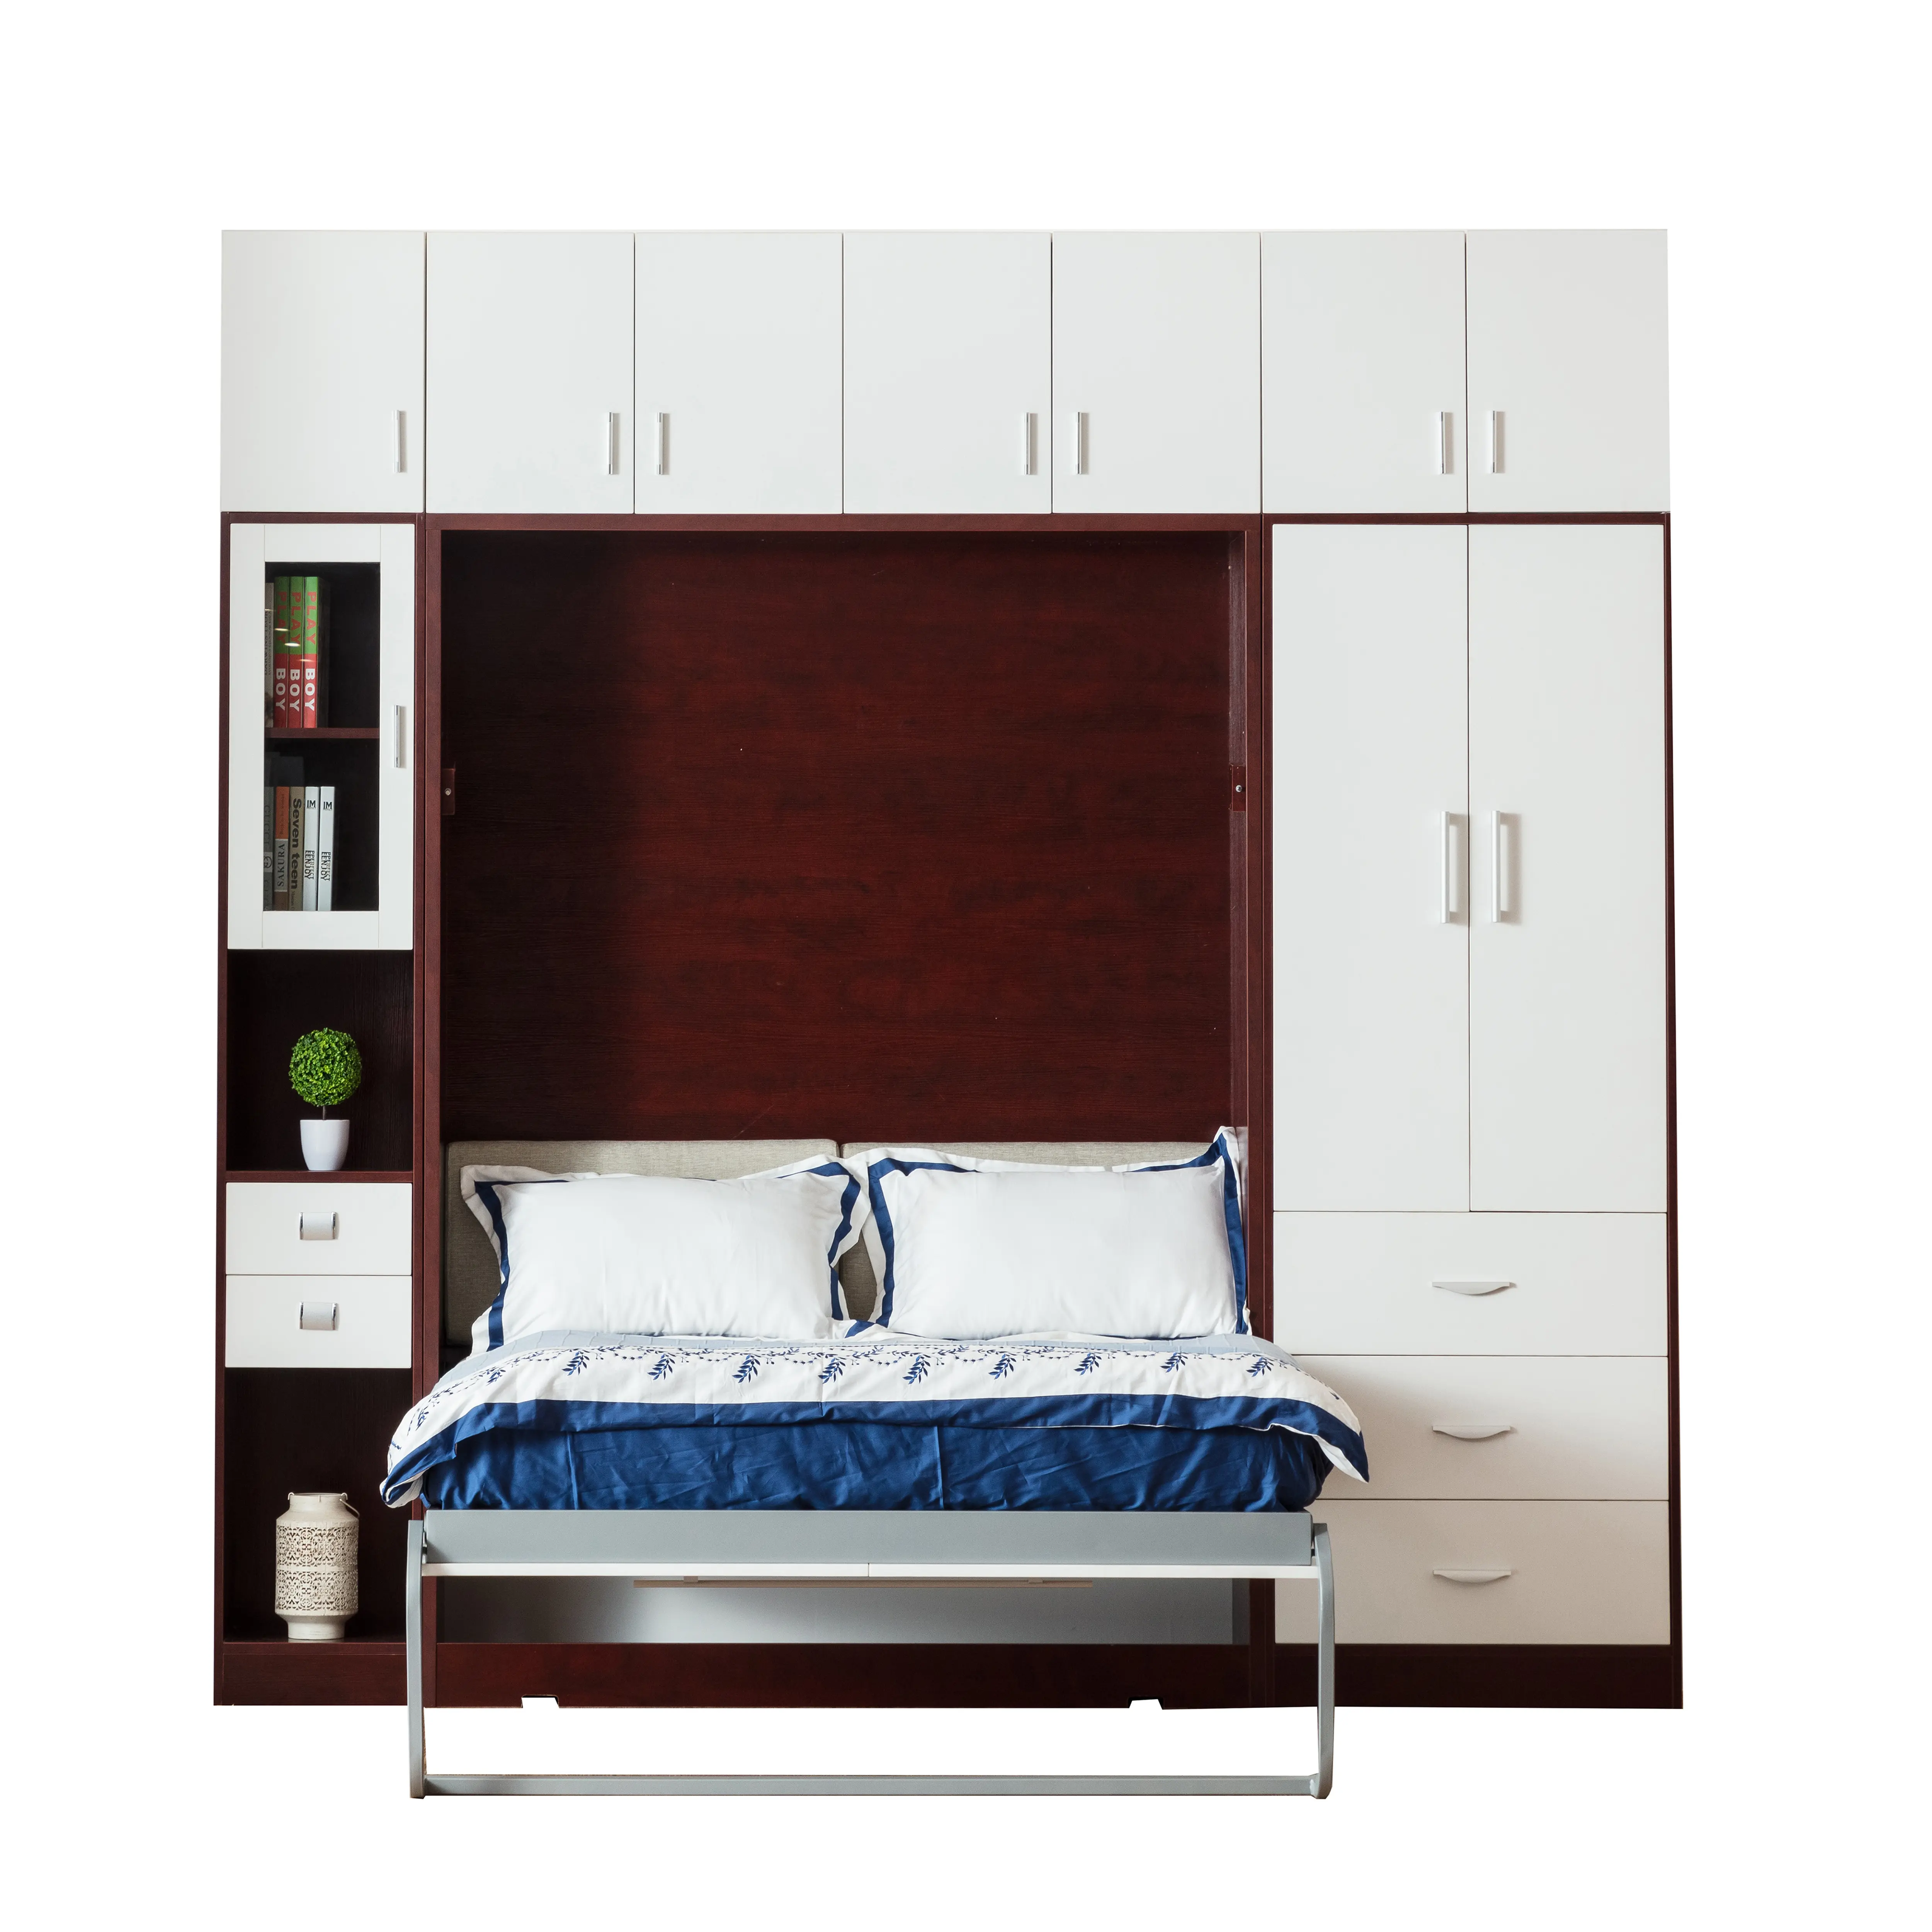 High quality hidden smart furniture bedroom sets wall mounted folding beds wall beds murphy beds